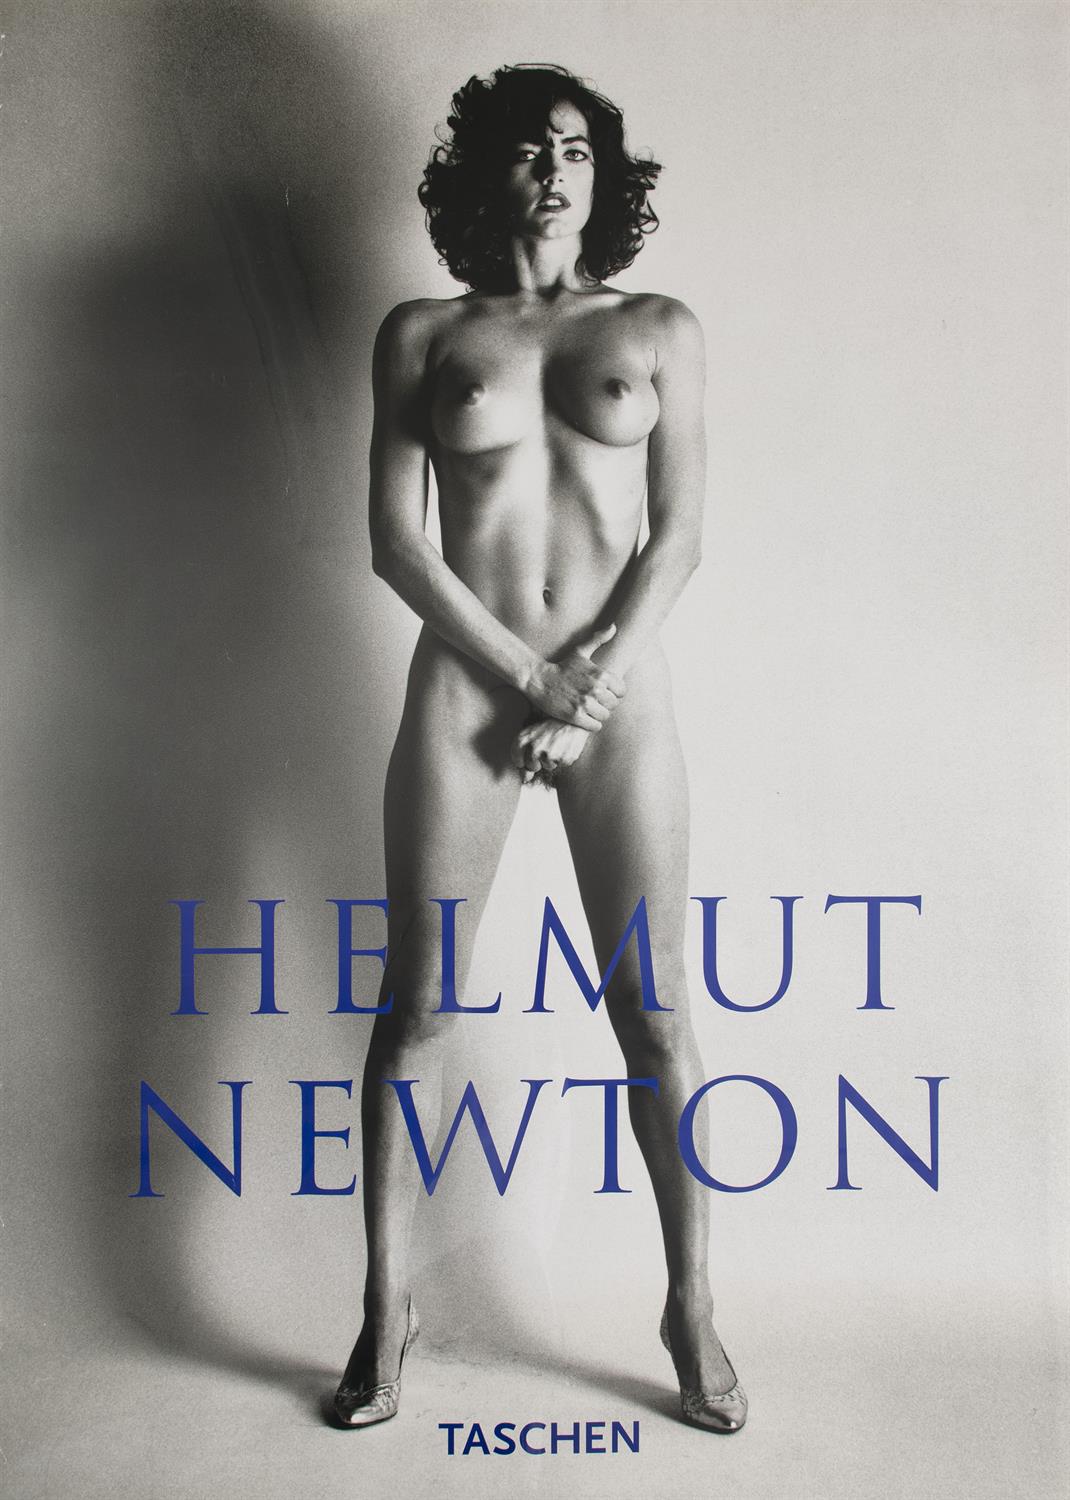 HELMUT NEWTOWN Nude Lady: Taschen, 1999 Colour offset, 138 x 97cm